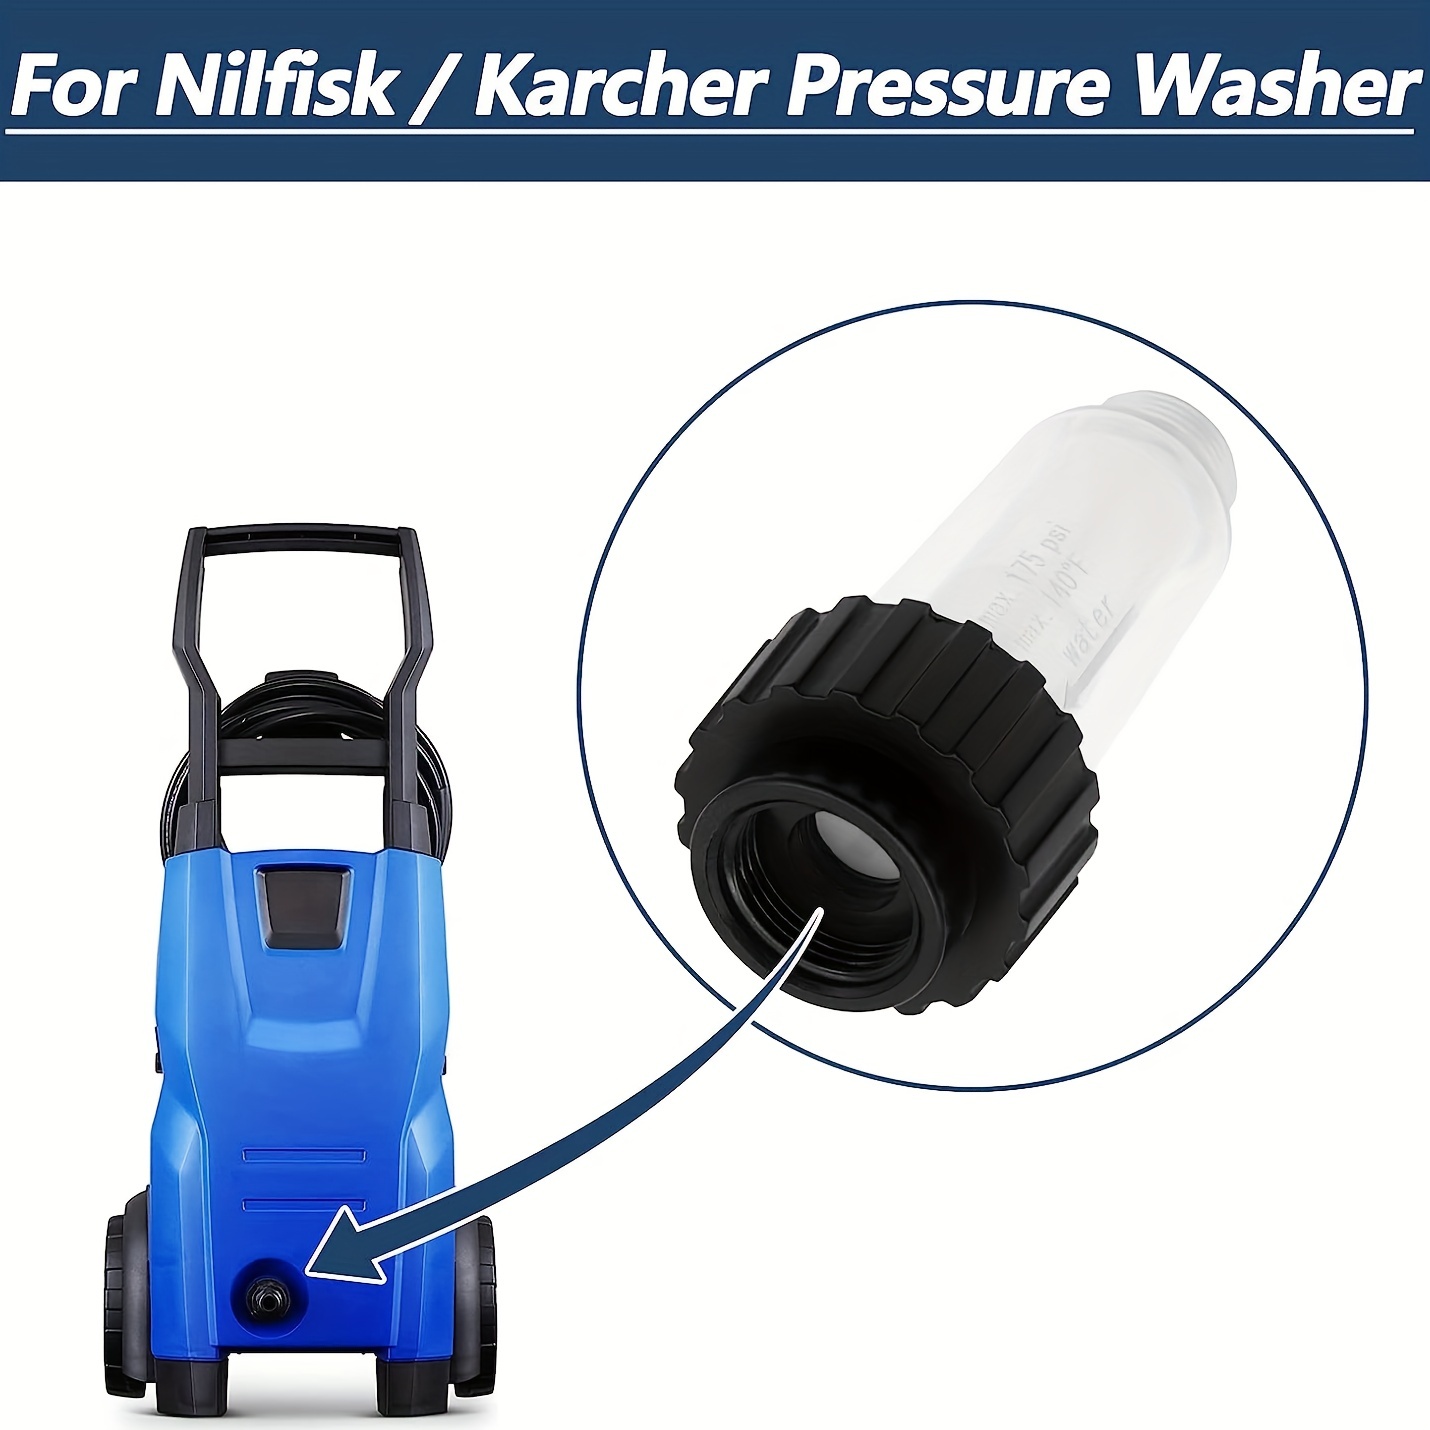 The Best Pressure Washer on the market? (Karcher K7) 